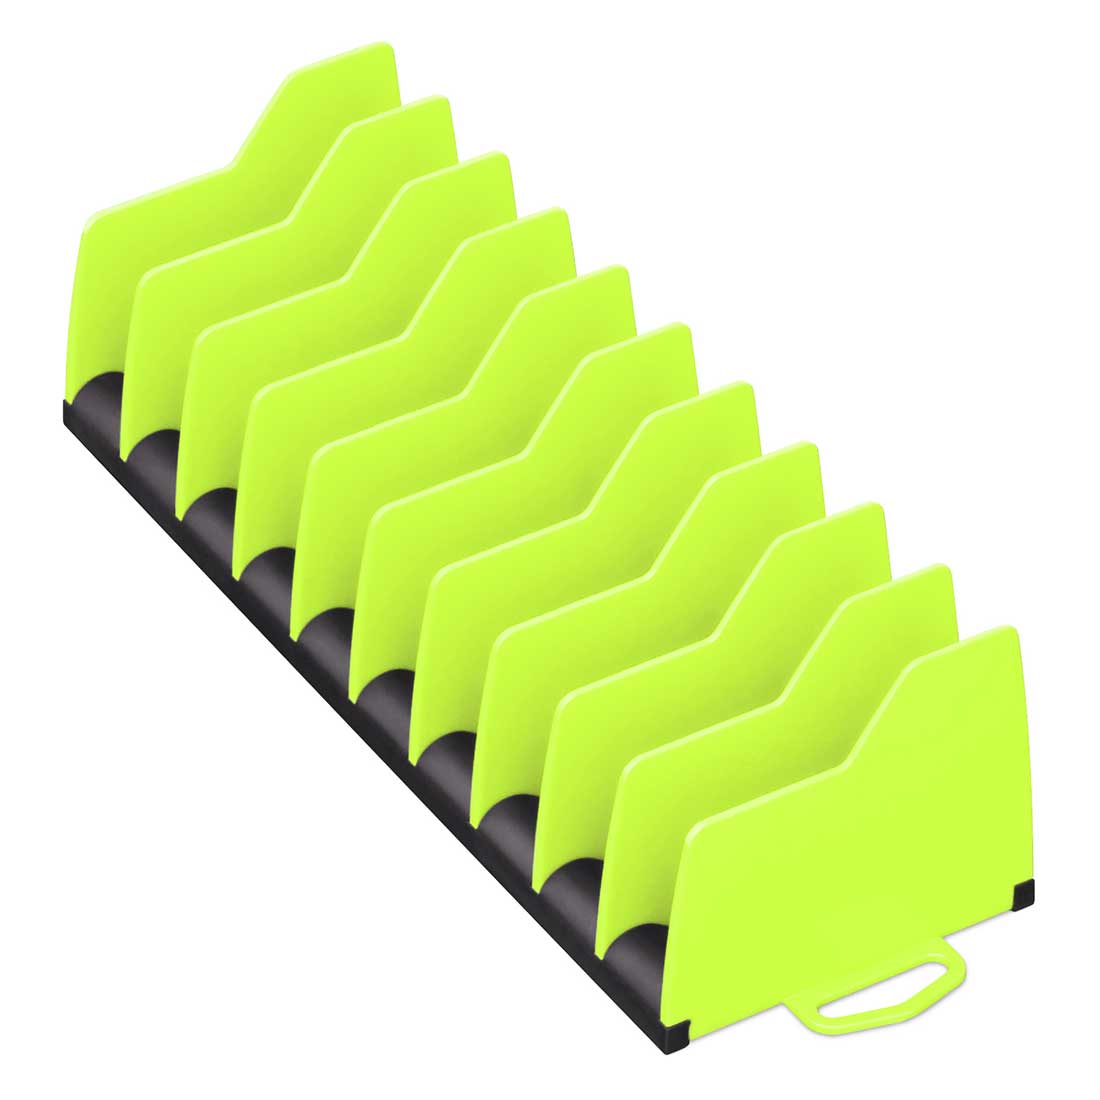 10 Pliers Organizer (Green)